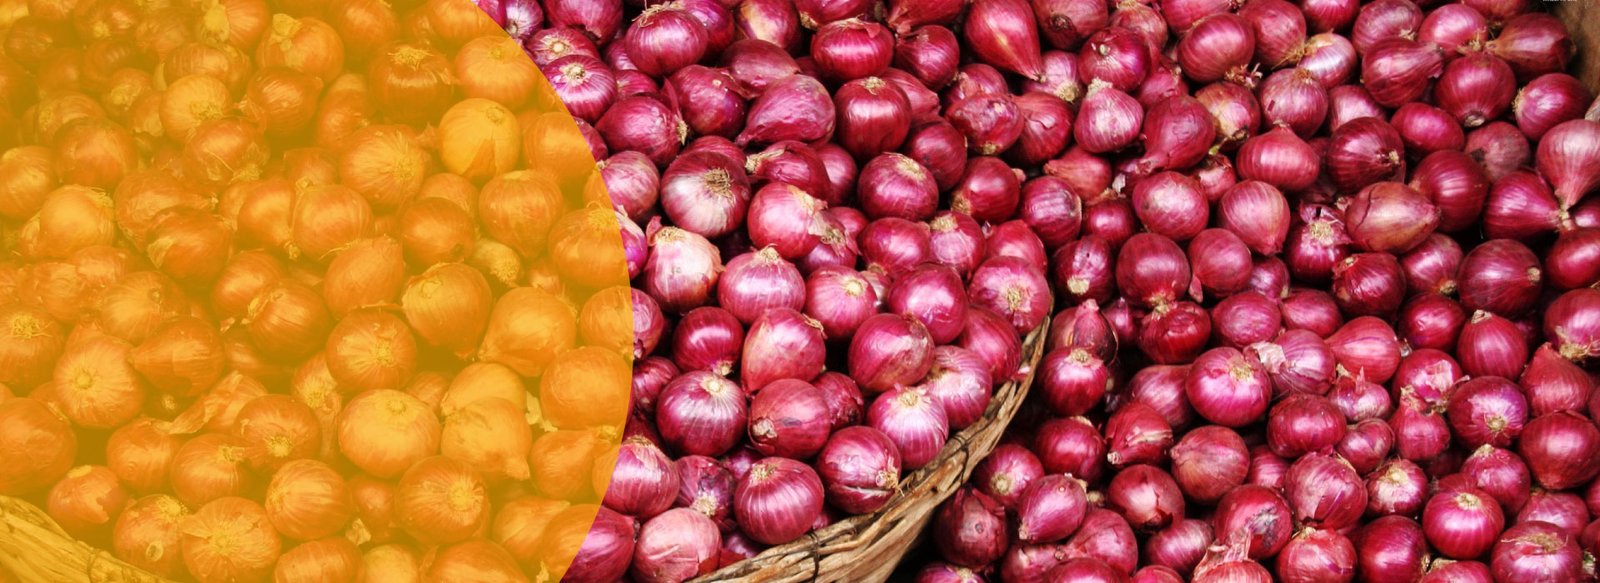 Diaz onion suppliers 